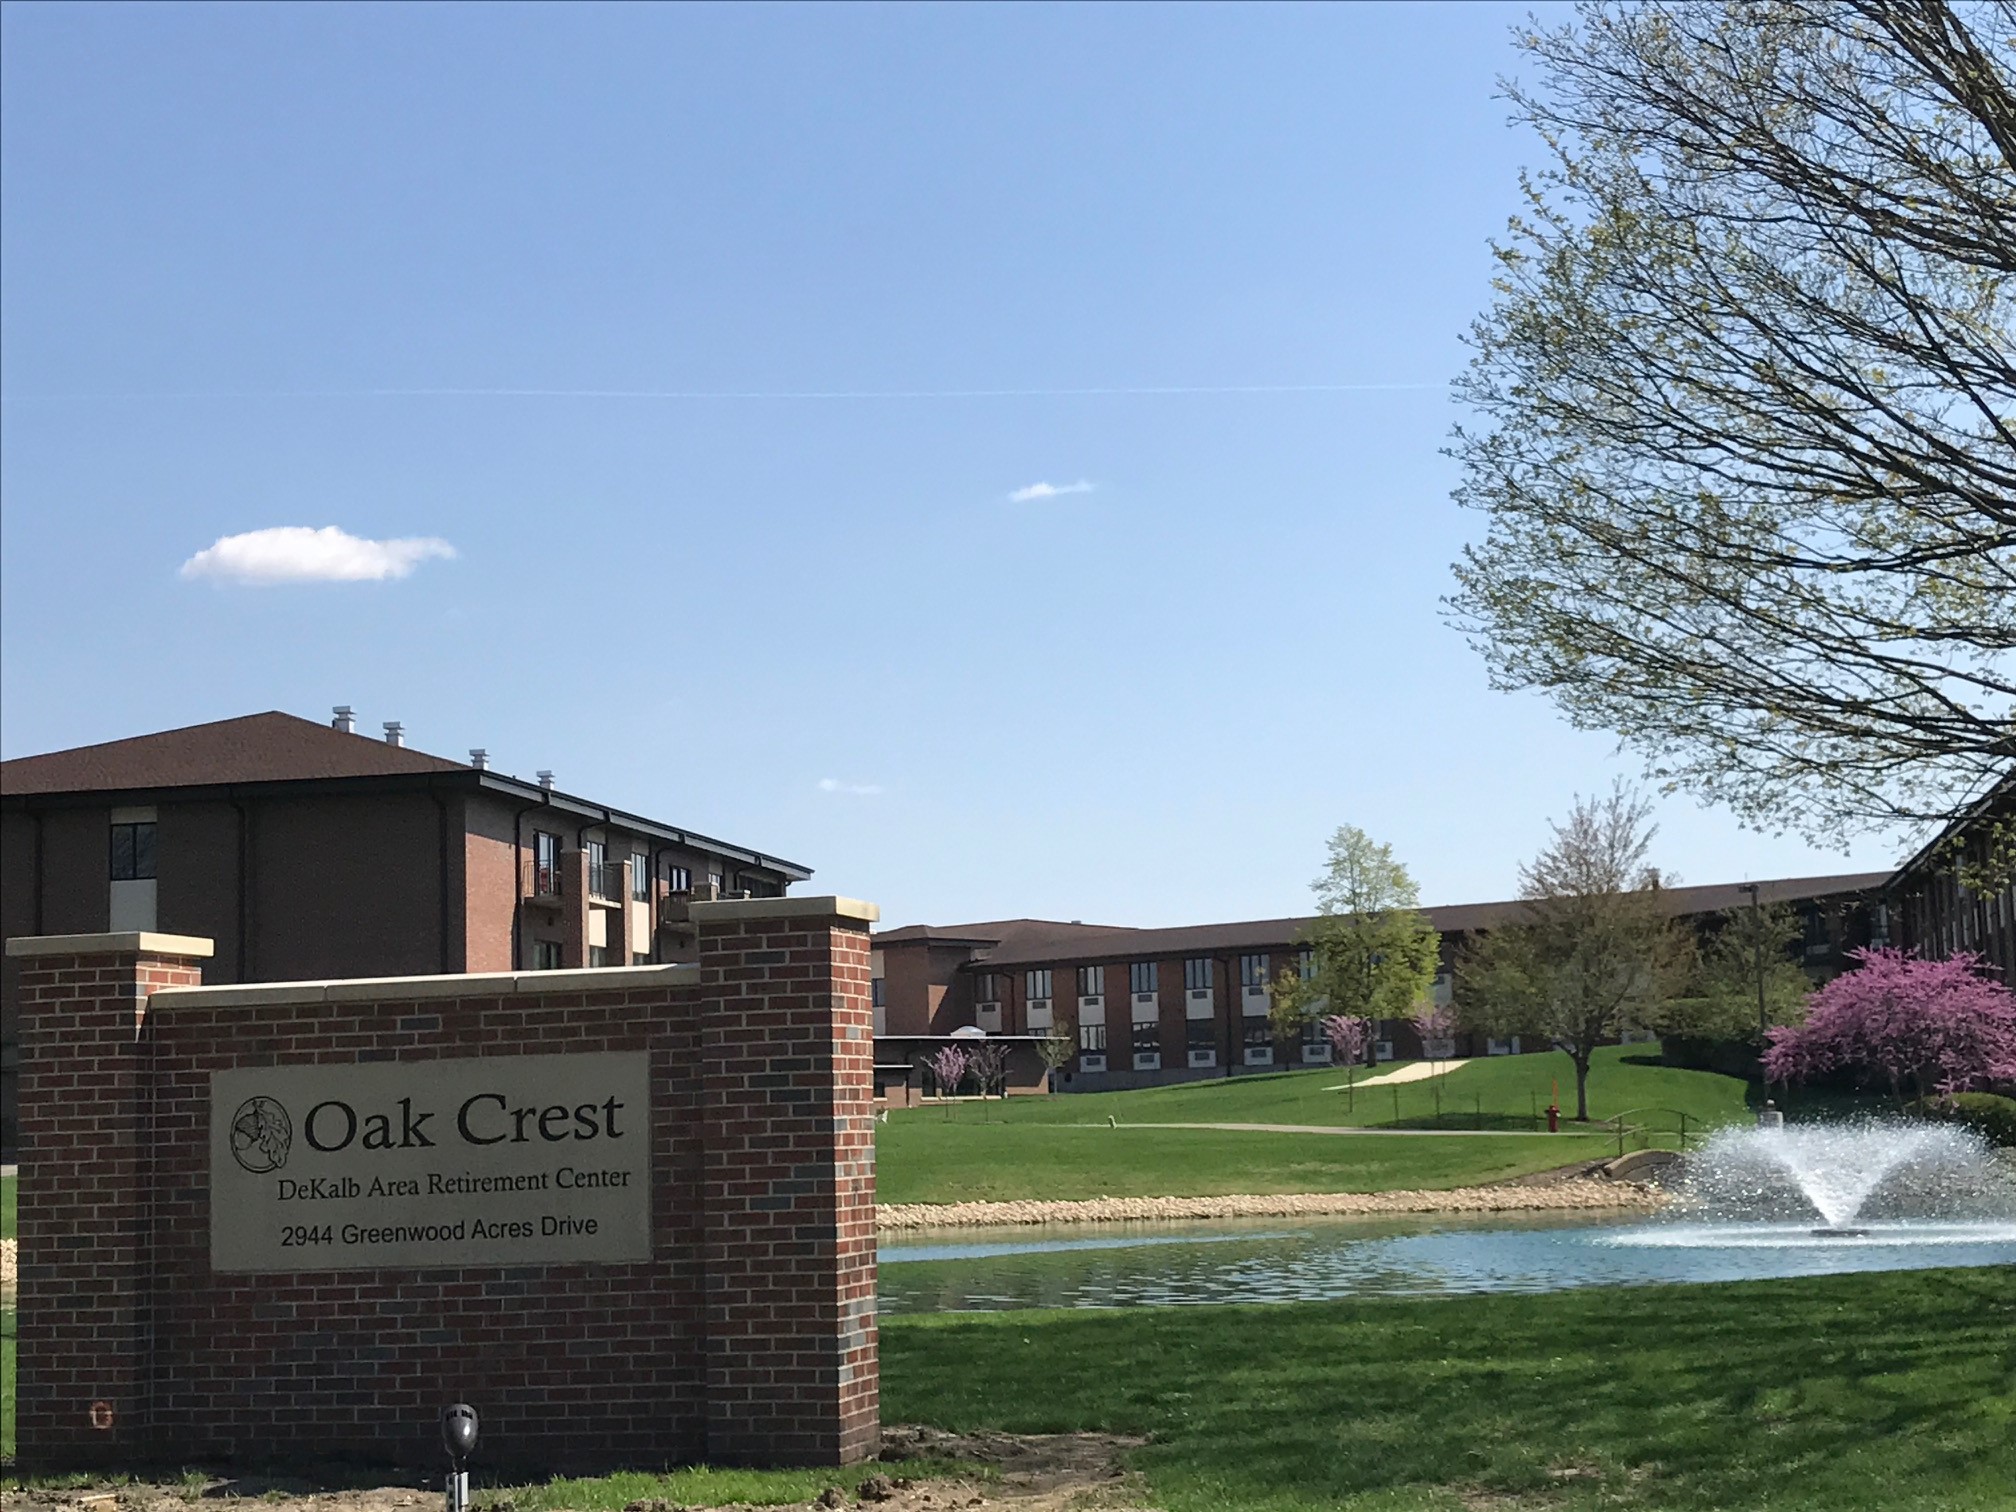 Oak Crest - Dekalb Area Retirement Center